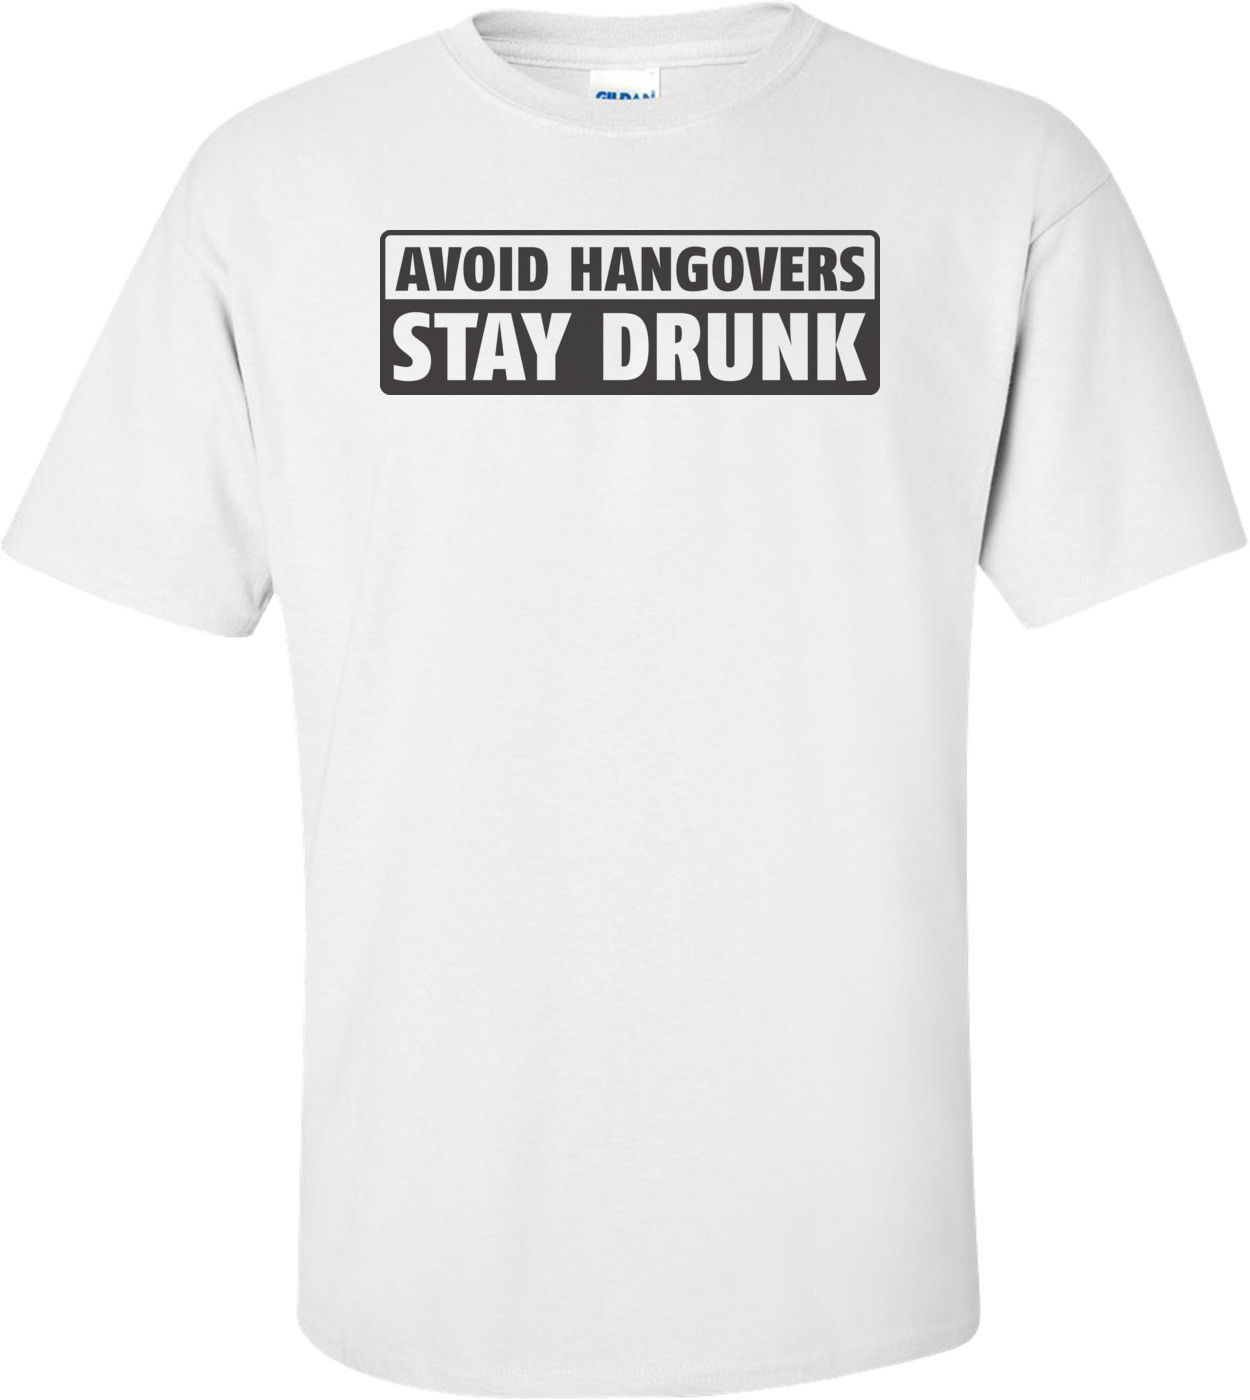 Avoid Hangovers Stay Drunk T-shirt